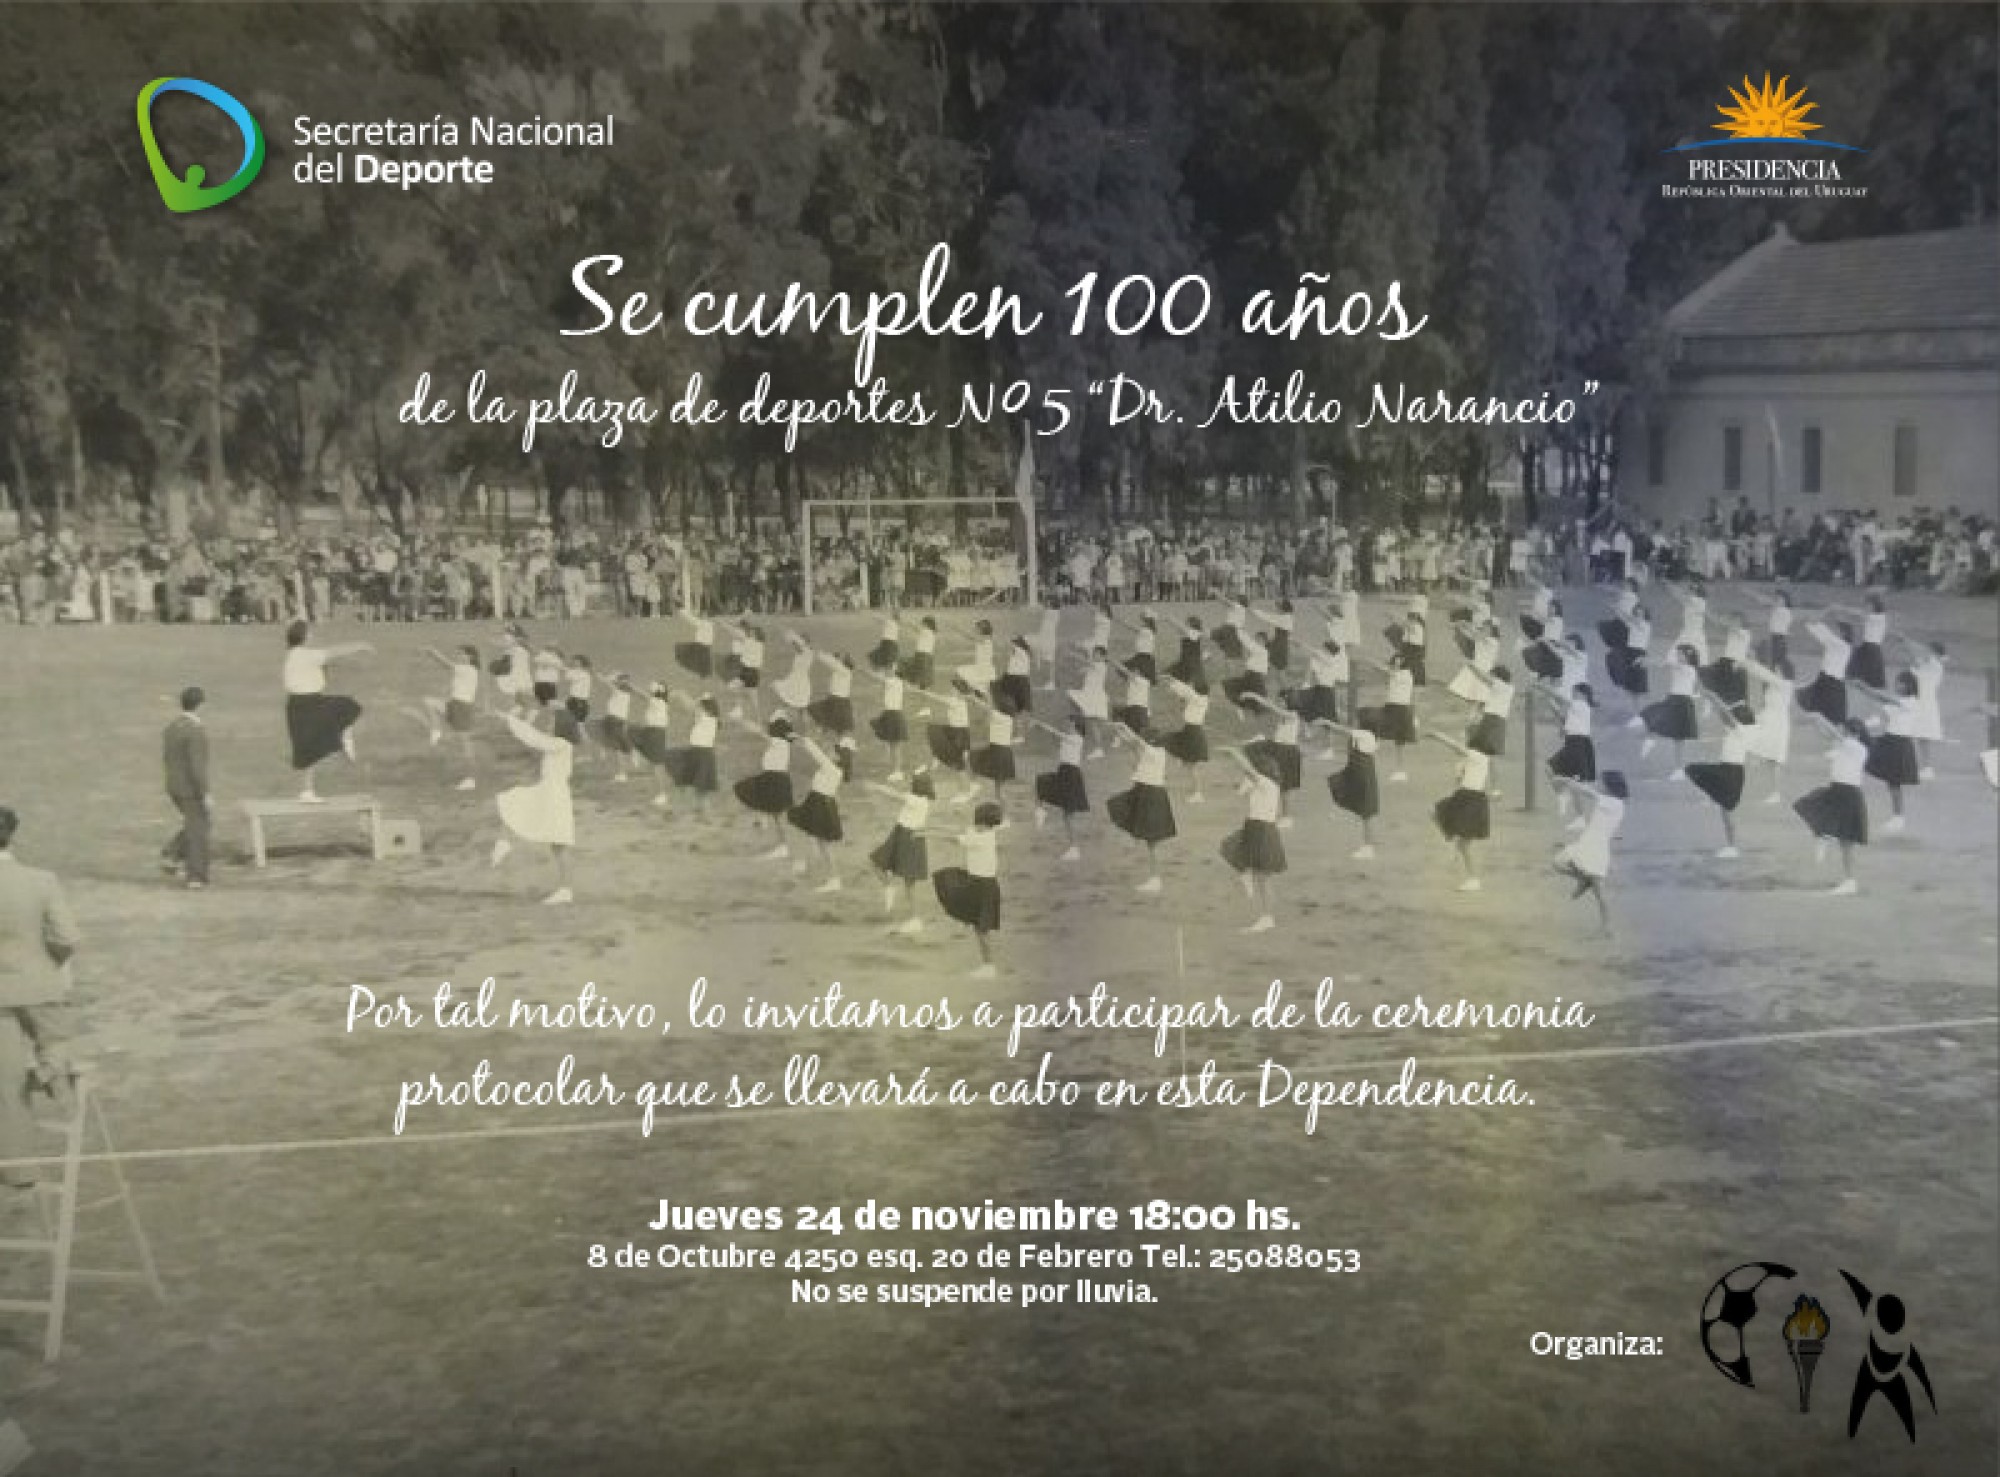 La Plaza de Deportes Nº5 "Dr.Atilio Narancio" cumplió 100 años.